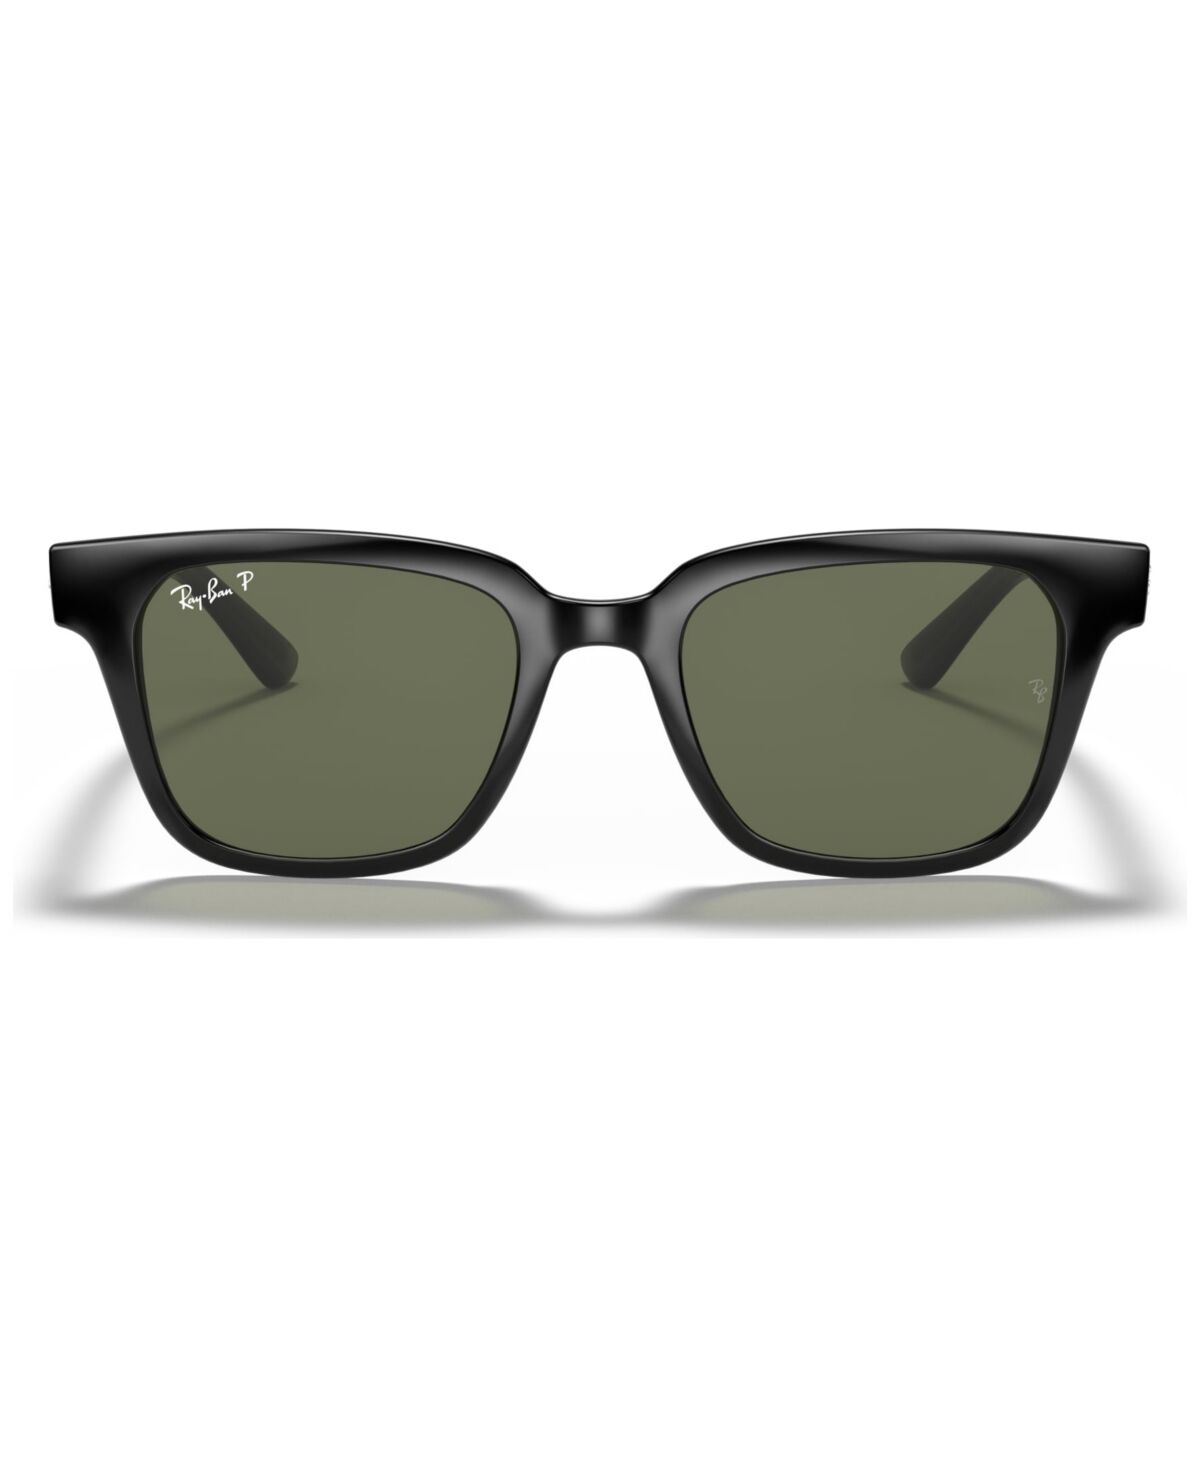 Ray-Ban Polarized Sunglasses, RB4323 51 - BLACK/DARK GREEN POLAR